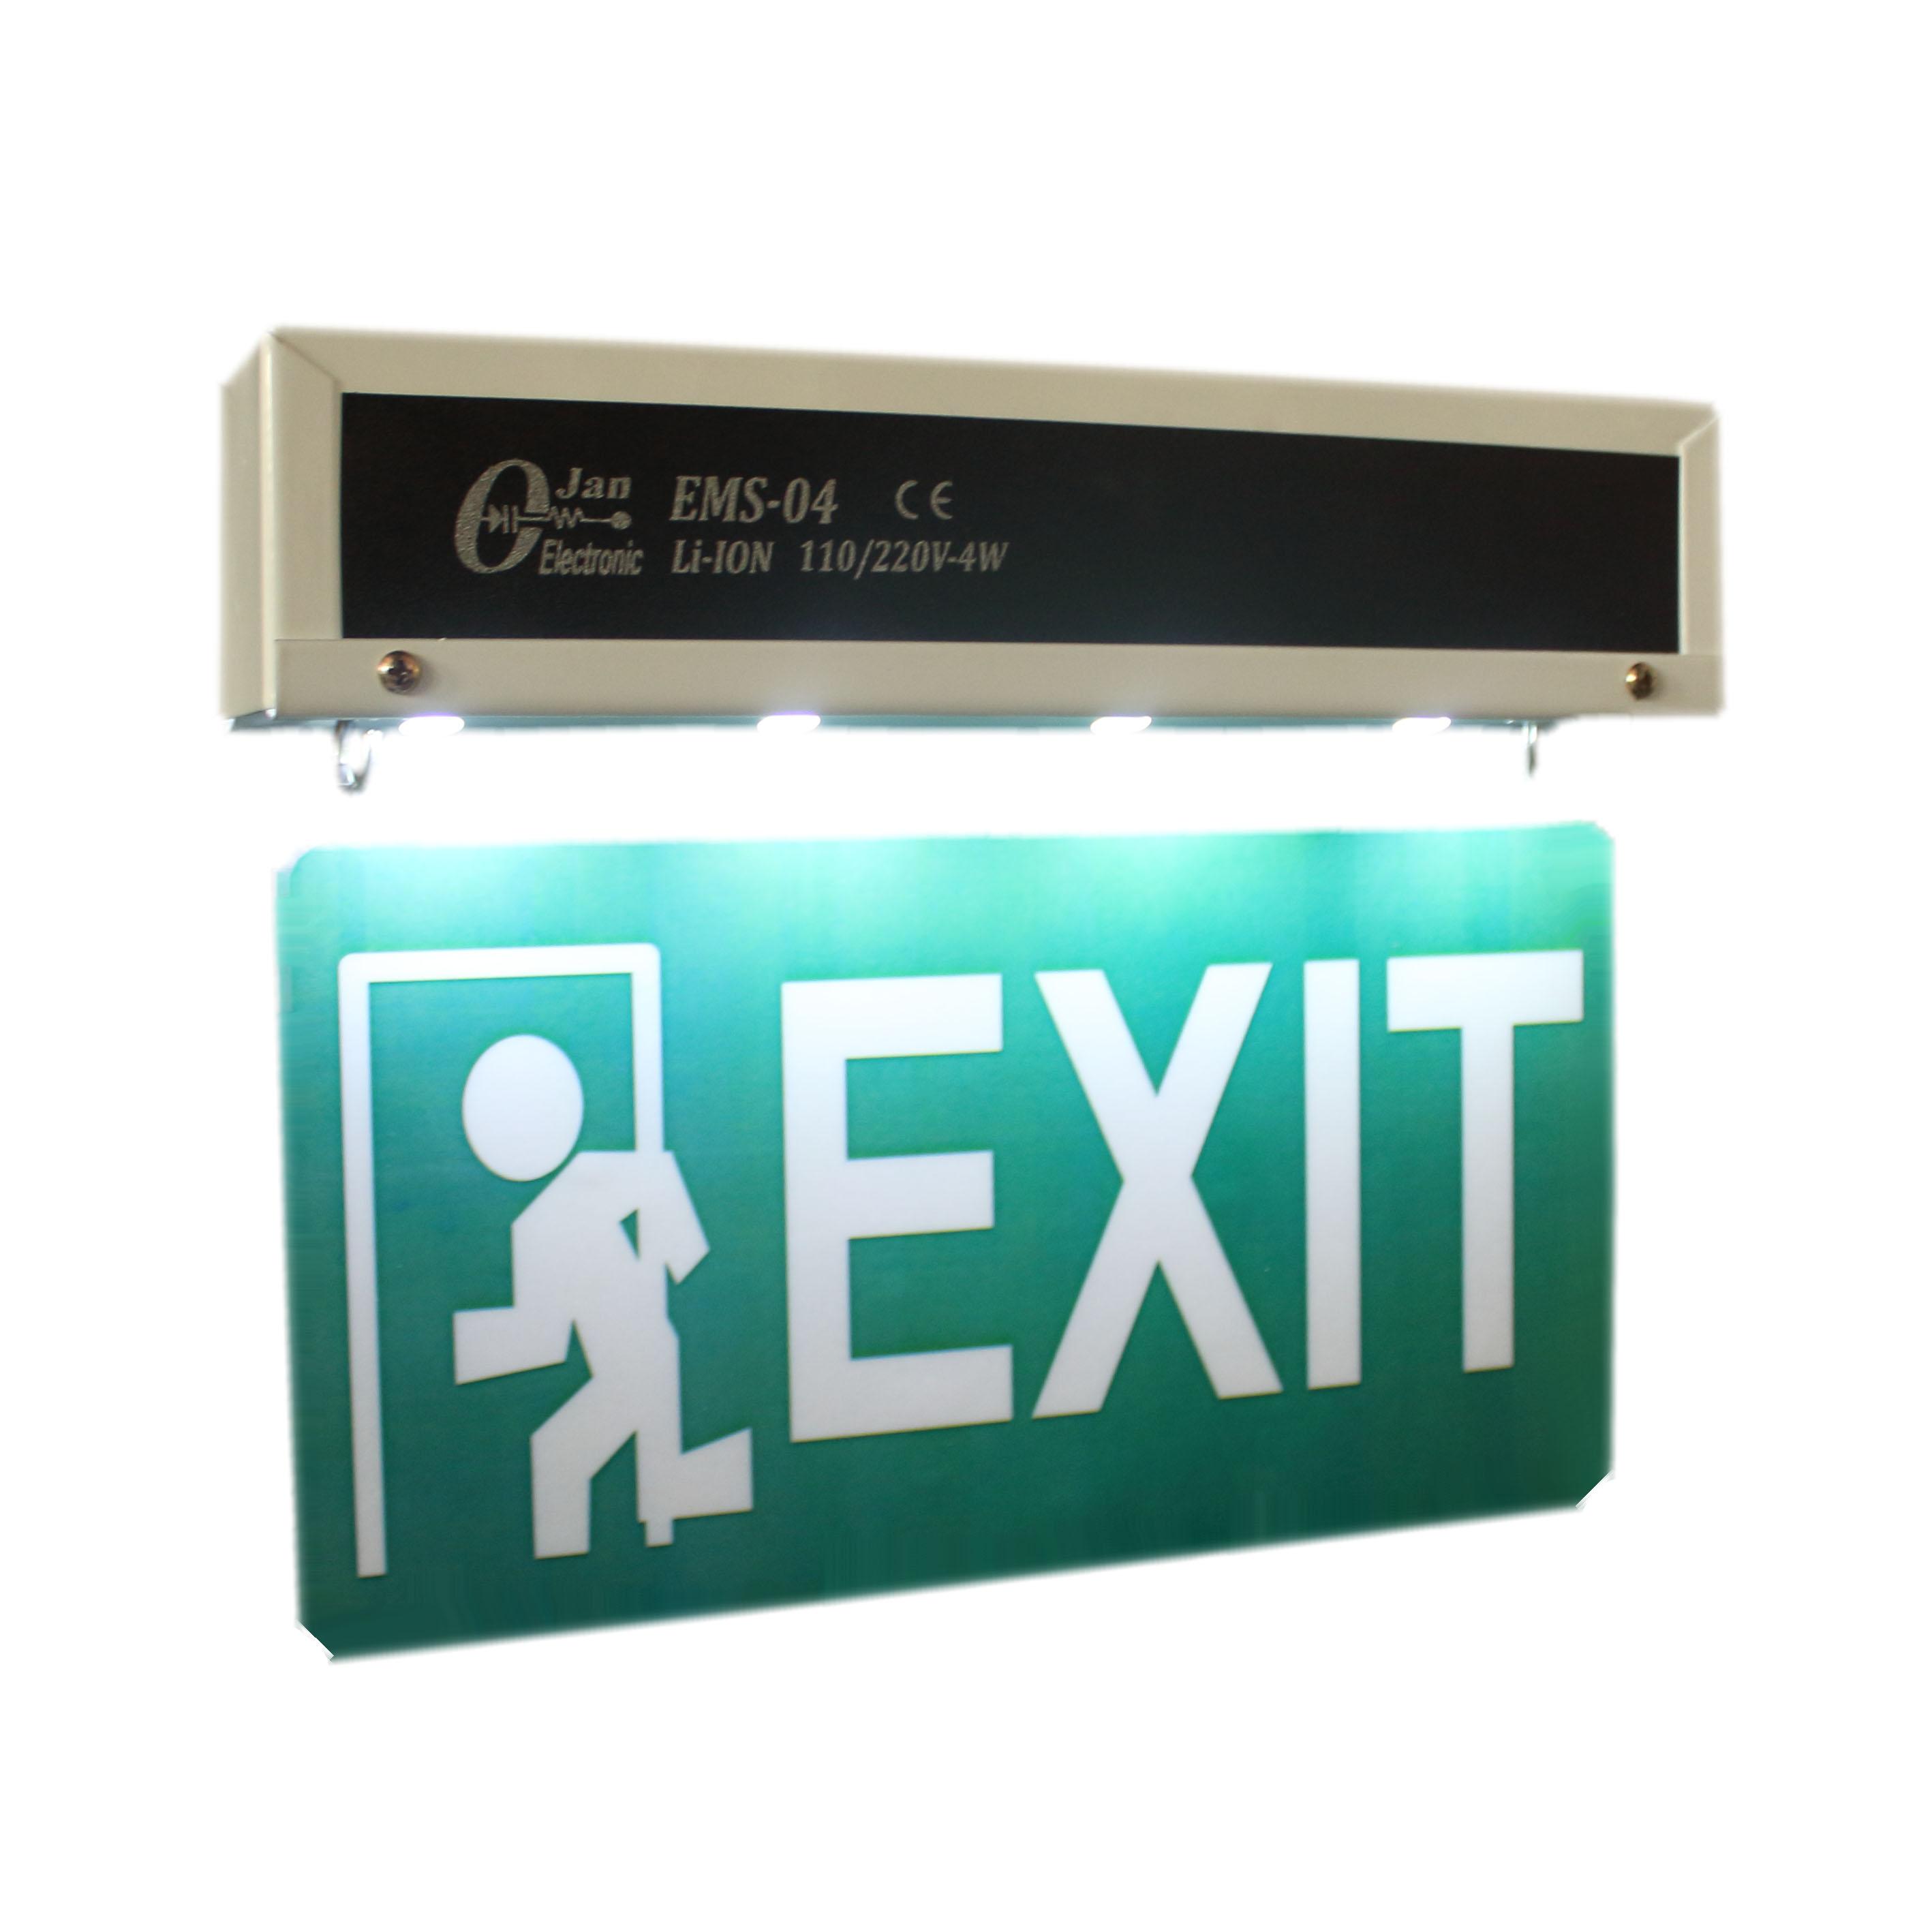 An emergency exit light